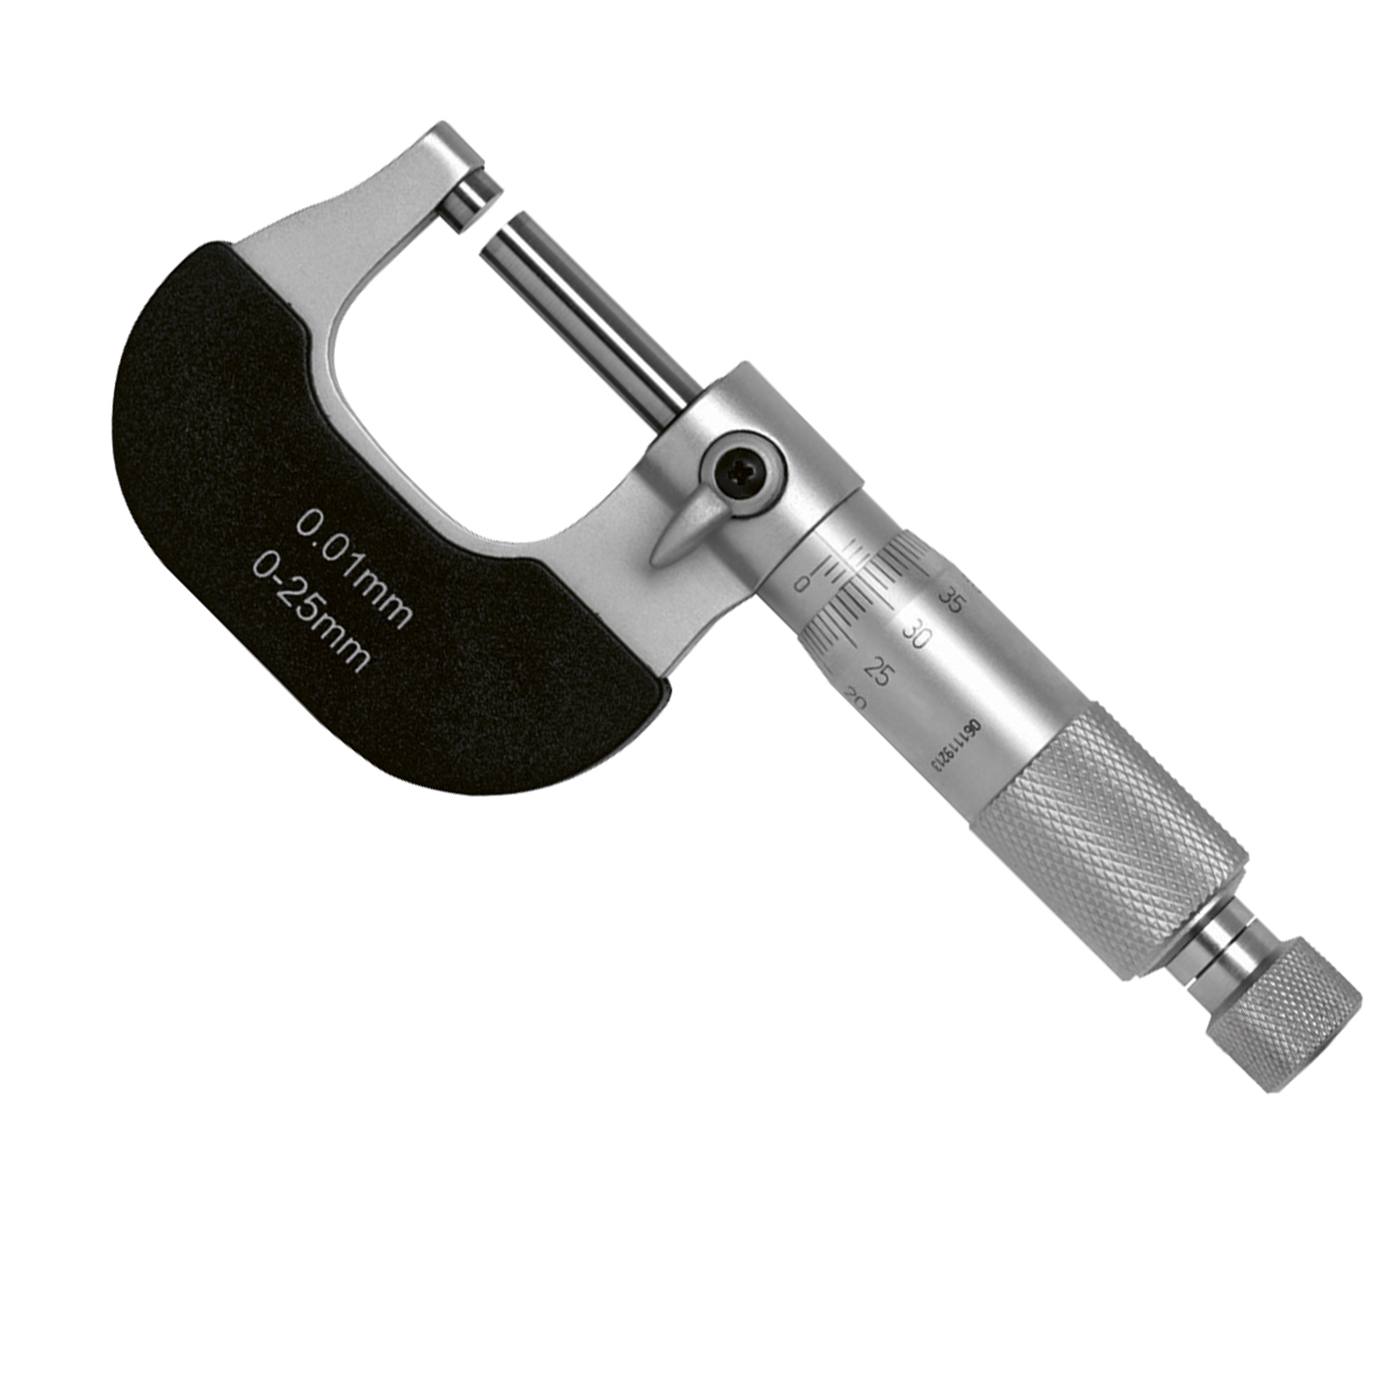 Micrometric Screw, Measuring Range 0-25 mm - 1 piece